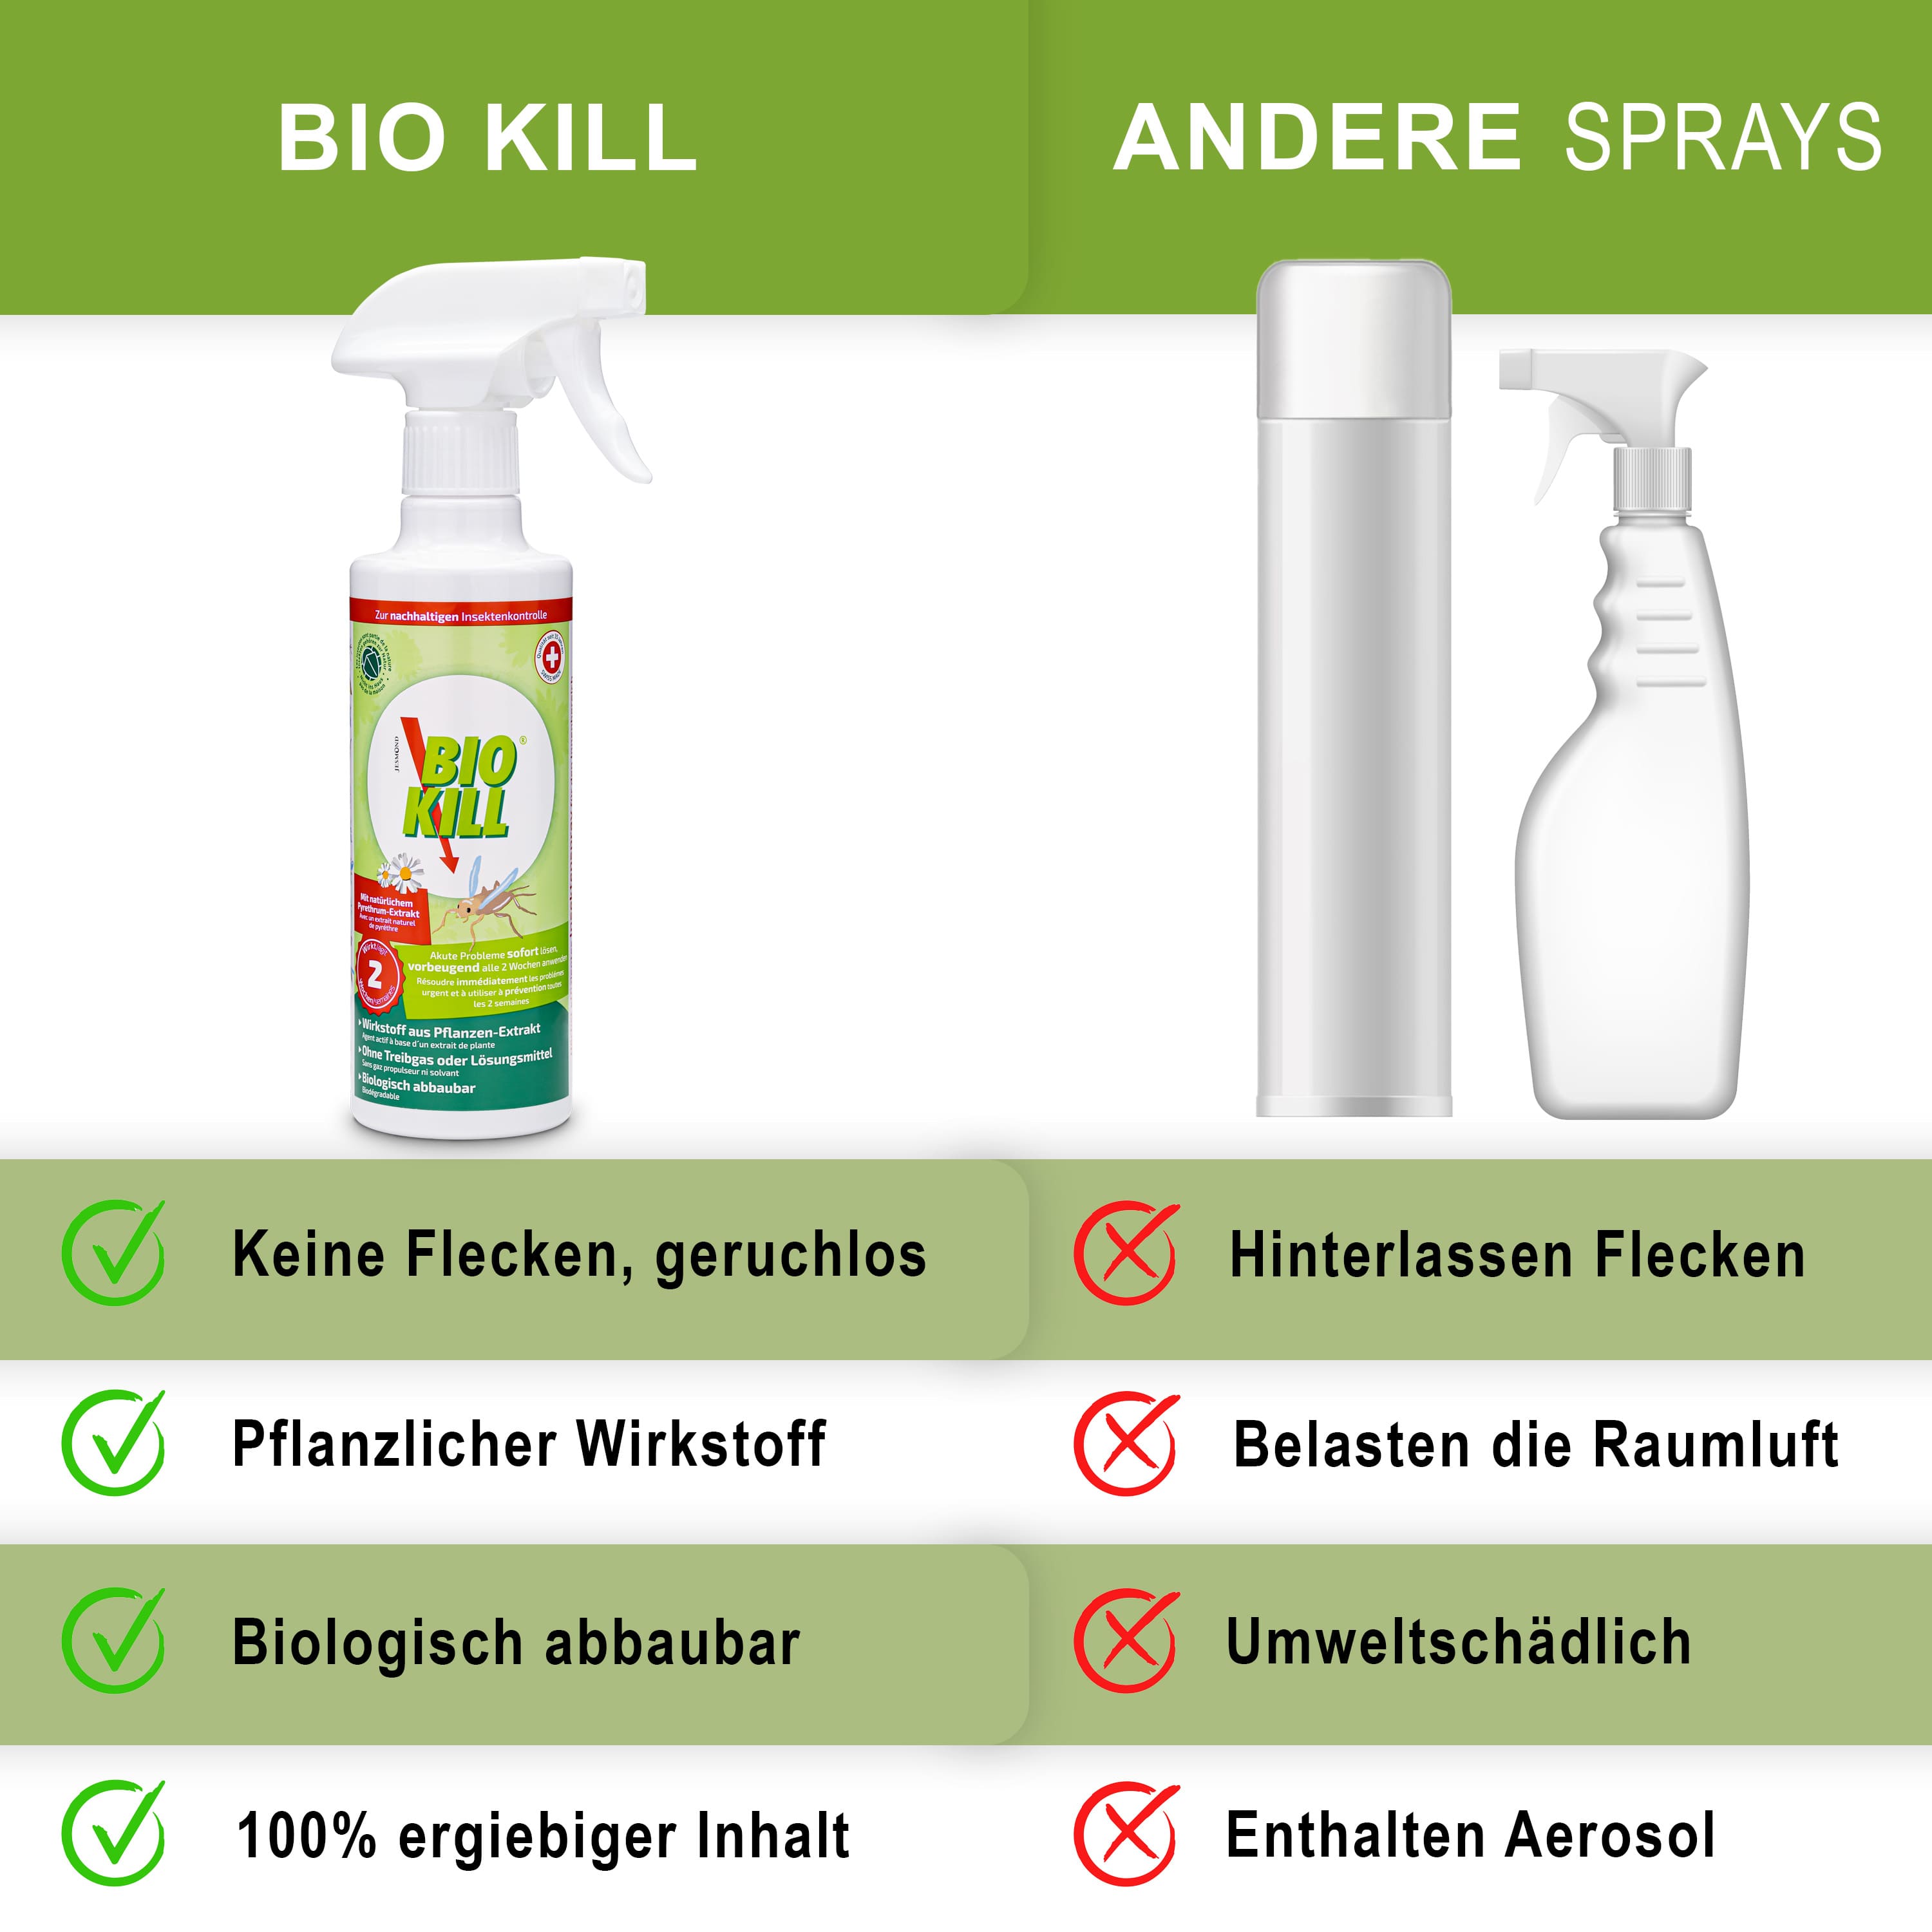 Bio Kill Insektenspray 100% pflanzlicher Wirkstoff